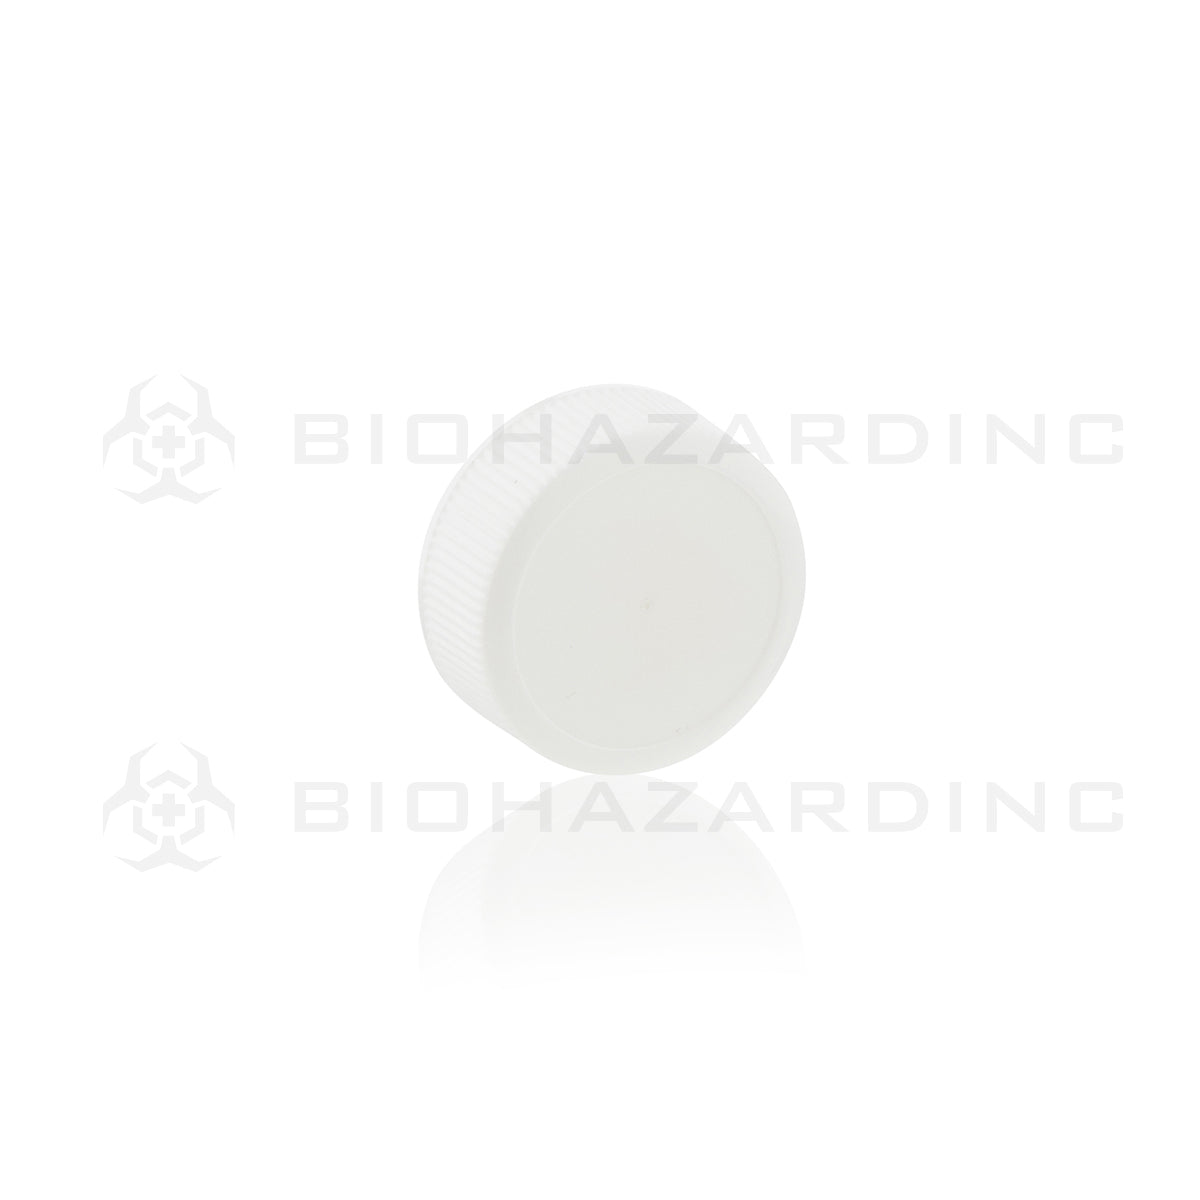 Plastic Cap | Polypropylene Plastic Caps | 28mm - White - 126 Count Cap Biohazard Inc   